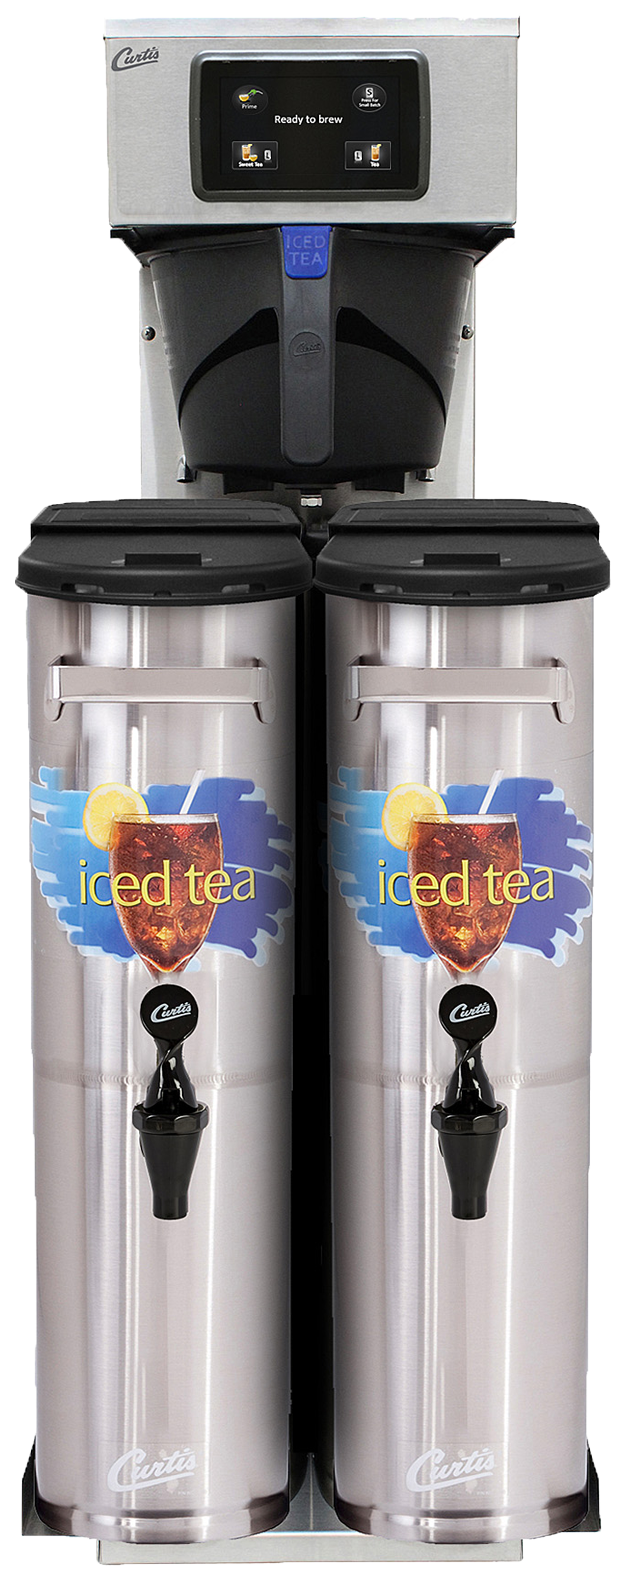 Each Wilbur Curtis Iced Tea Dispenser 5.0 Gallon Round Tea Dispenser TC-5H Designed to Preserve Flavor 